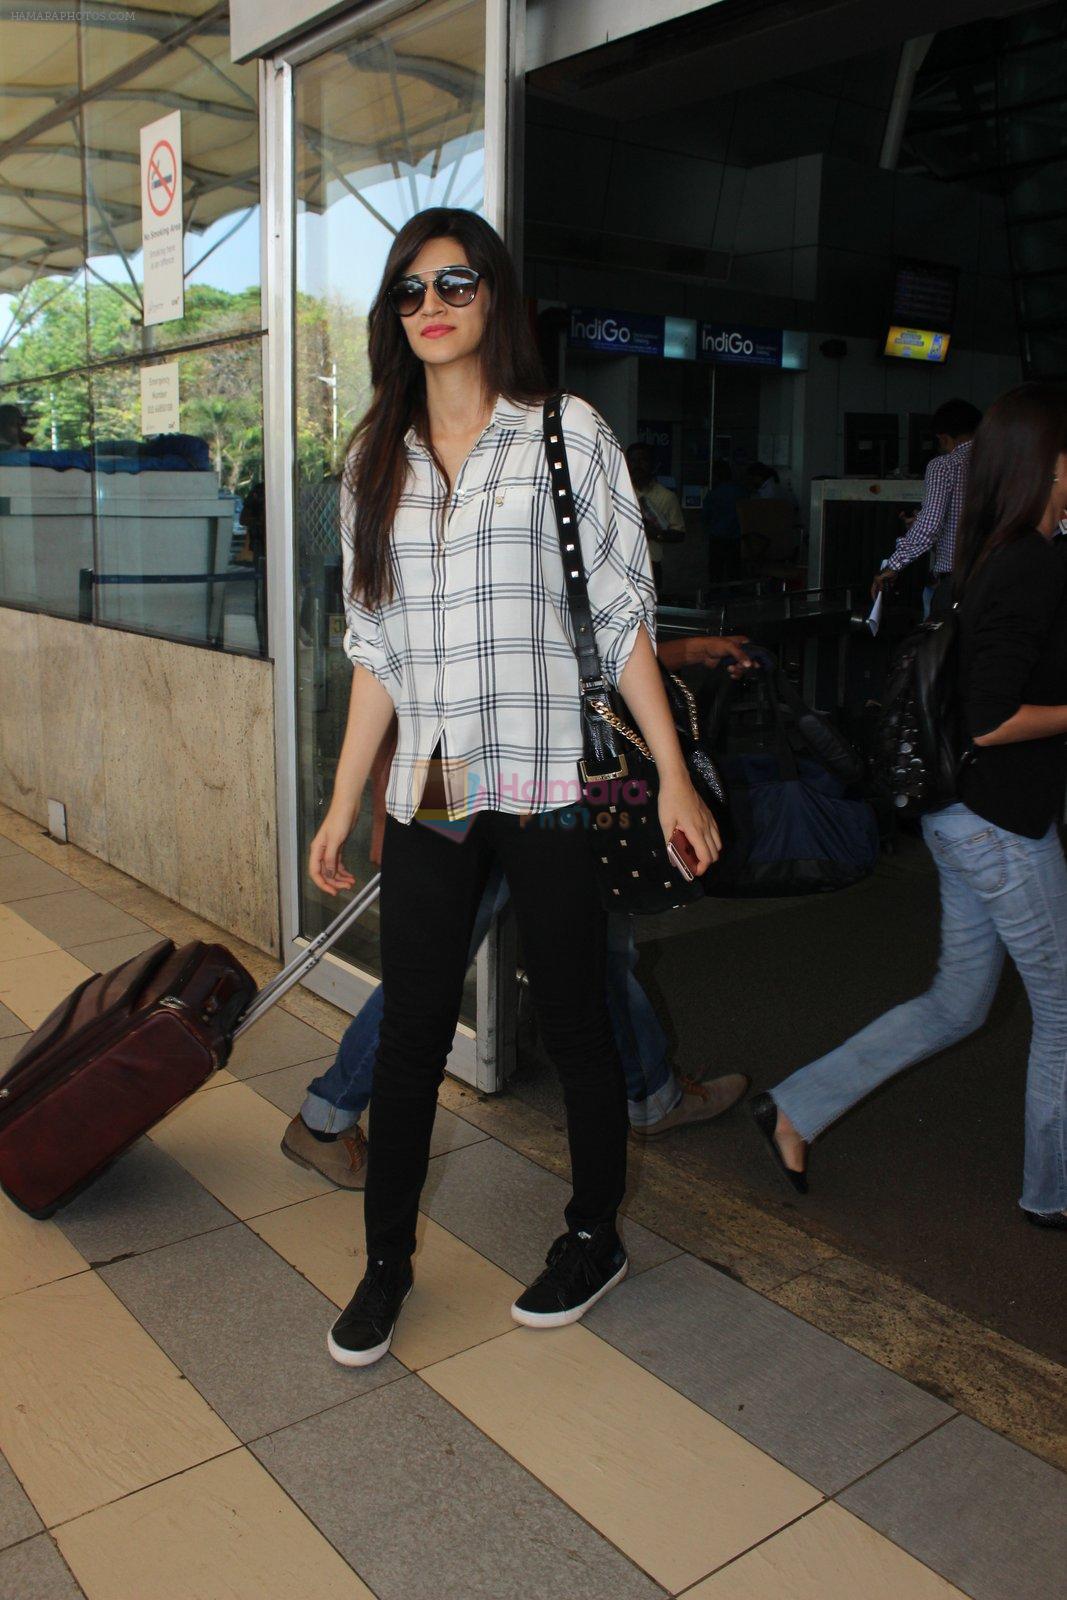 Kriti Sanon snapped at airport in Mumbai on 18th Feb 2016